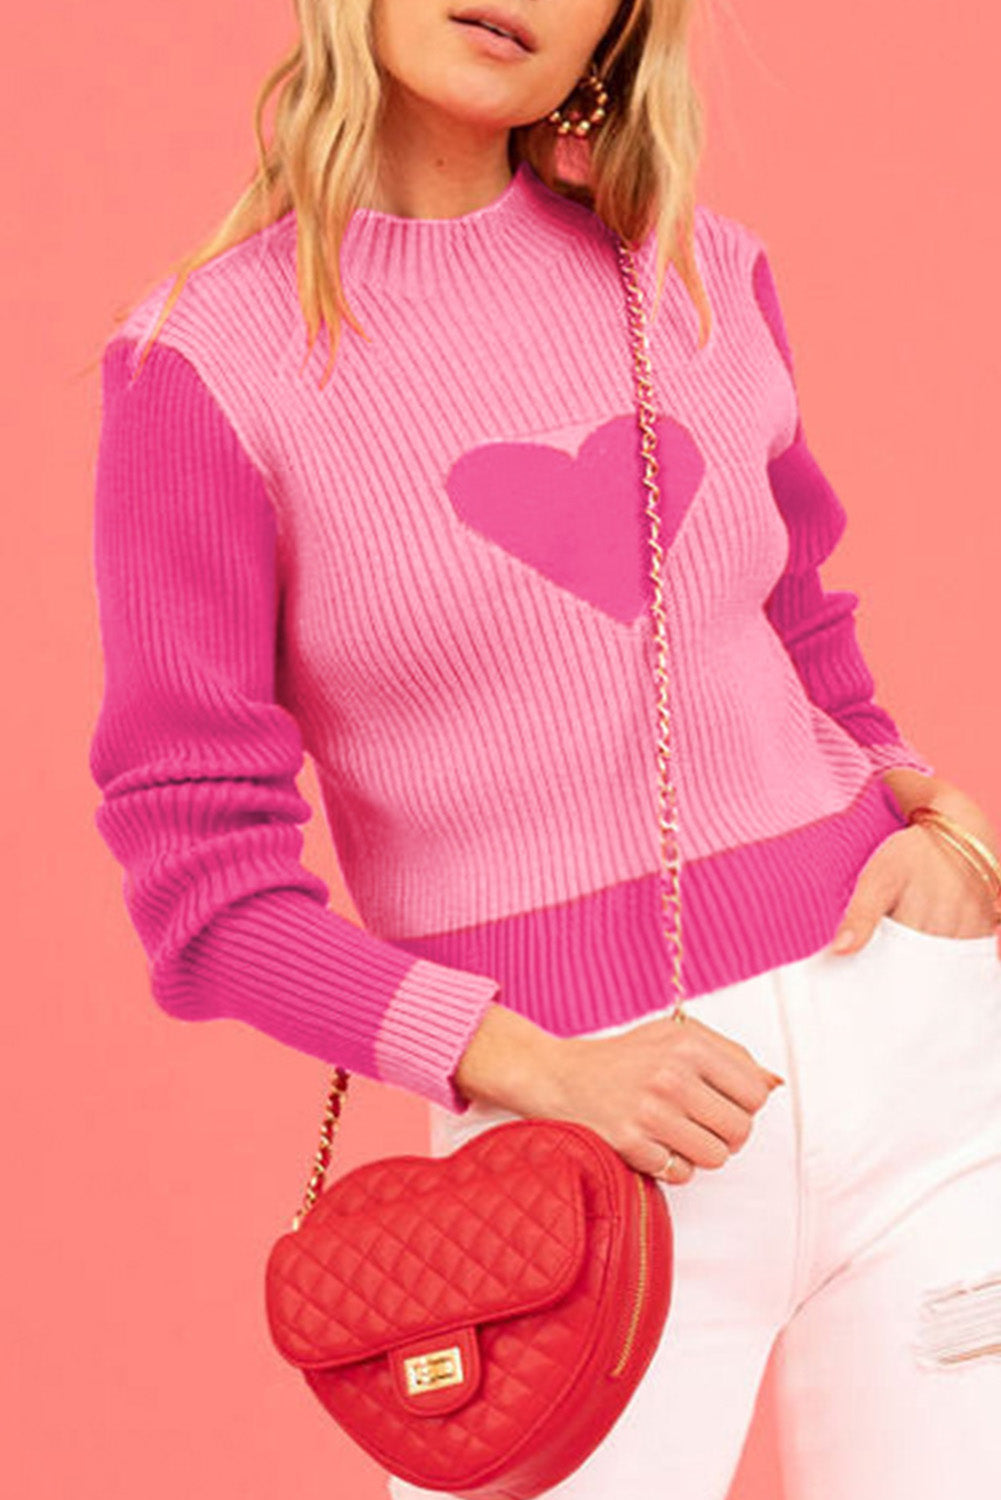 Black Mock Neck Colorblock Valentine Heart Ribbed Sweater OniTakai